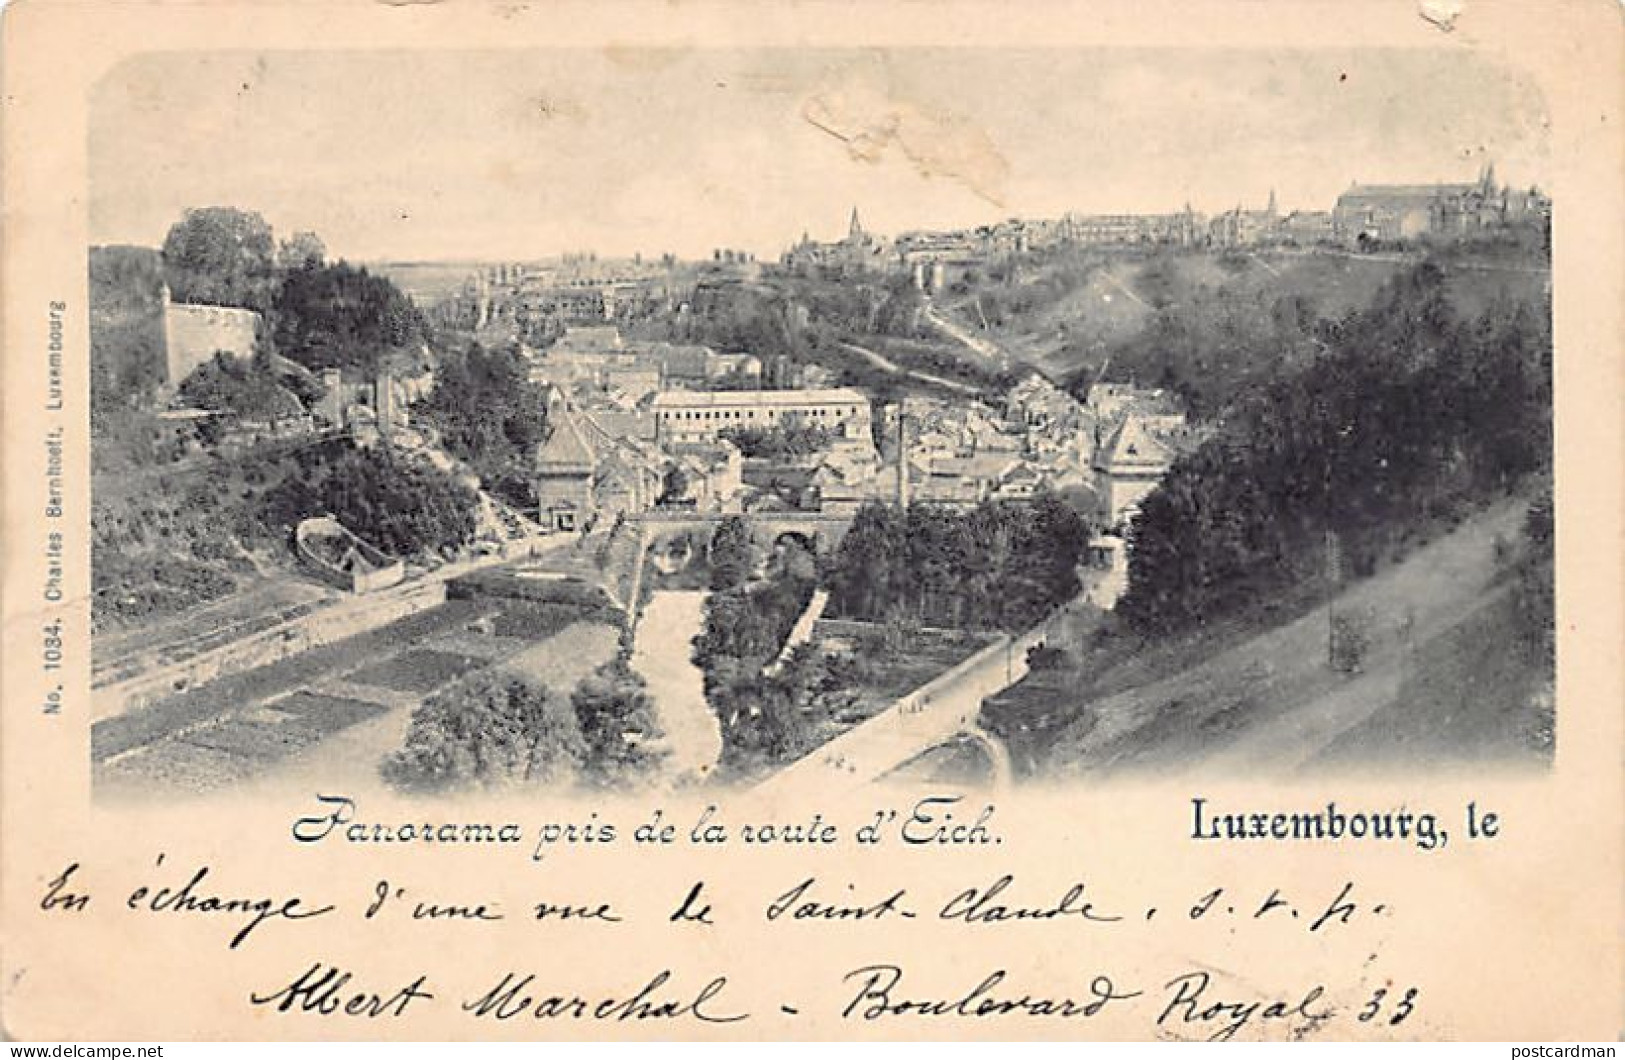 LUXEMBOURG-VILLE - Panorama Pris De La Route D'Eich - Ed. Charles Bernhoeft 1034 - Luxemburg - Stad